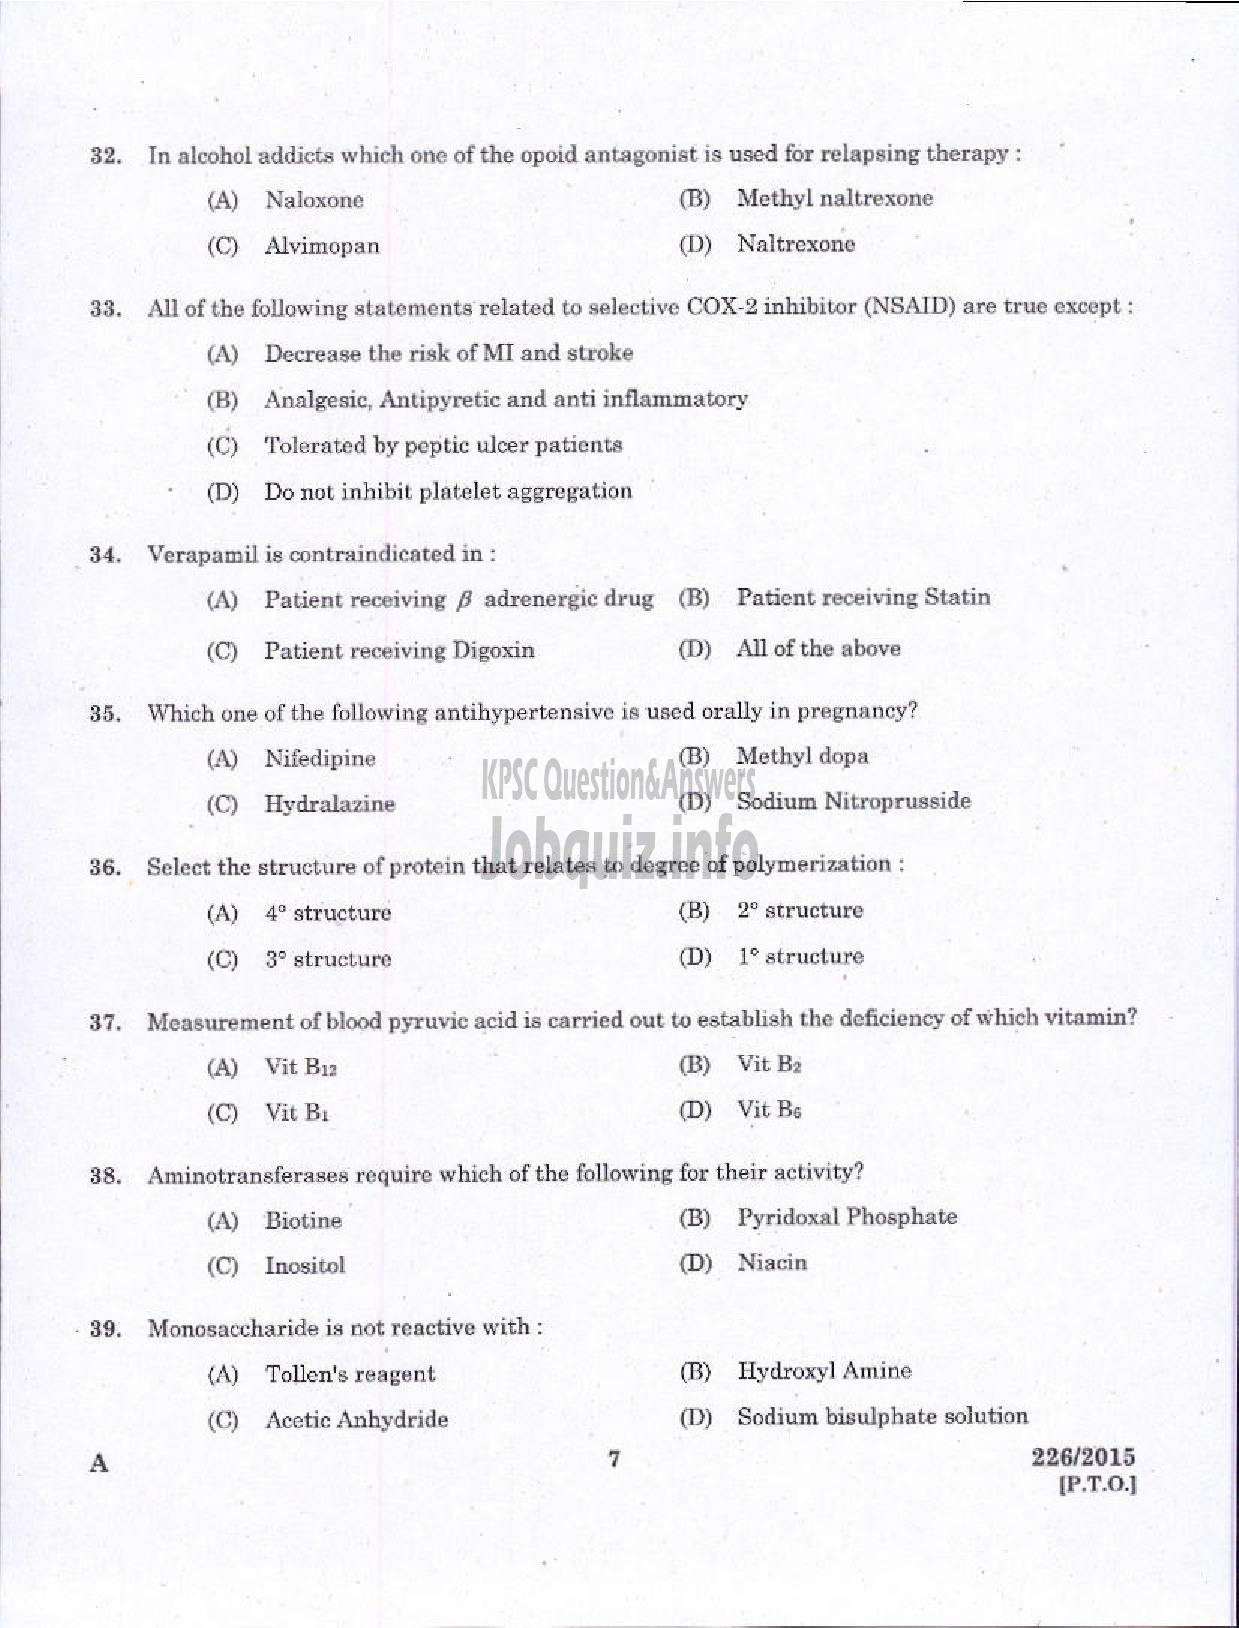 Kerala PSC Question Paper - CHEMIST GR II HEALTH SERVICES-5